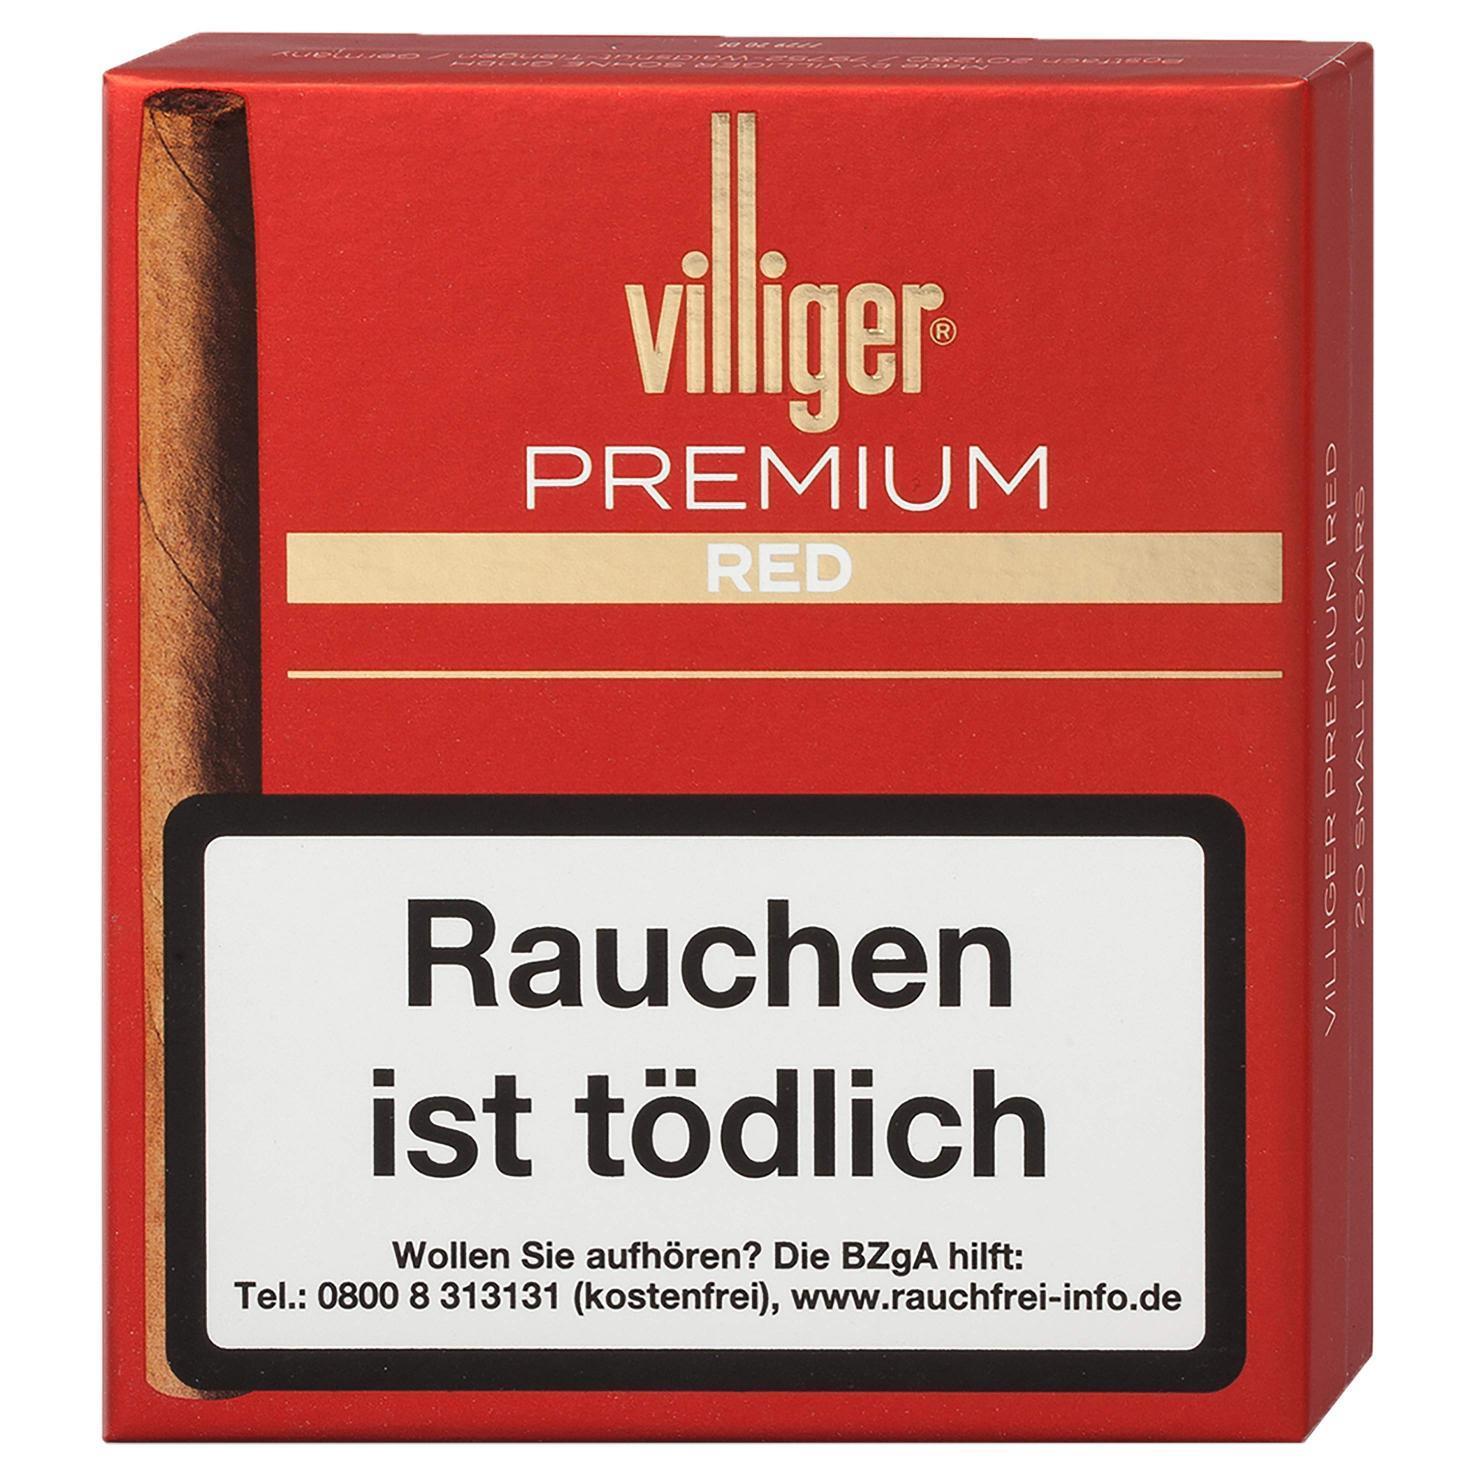 Villiger Premium Red  5 x 20 Zigarillos